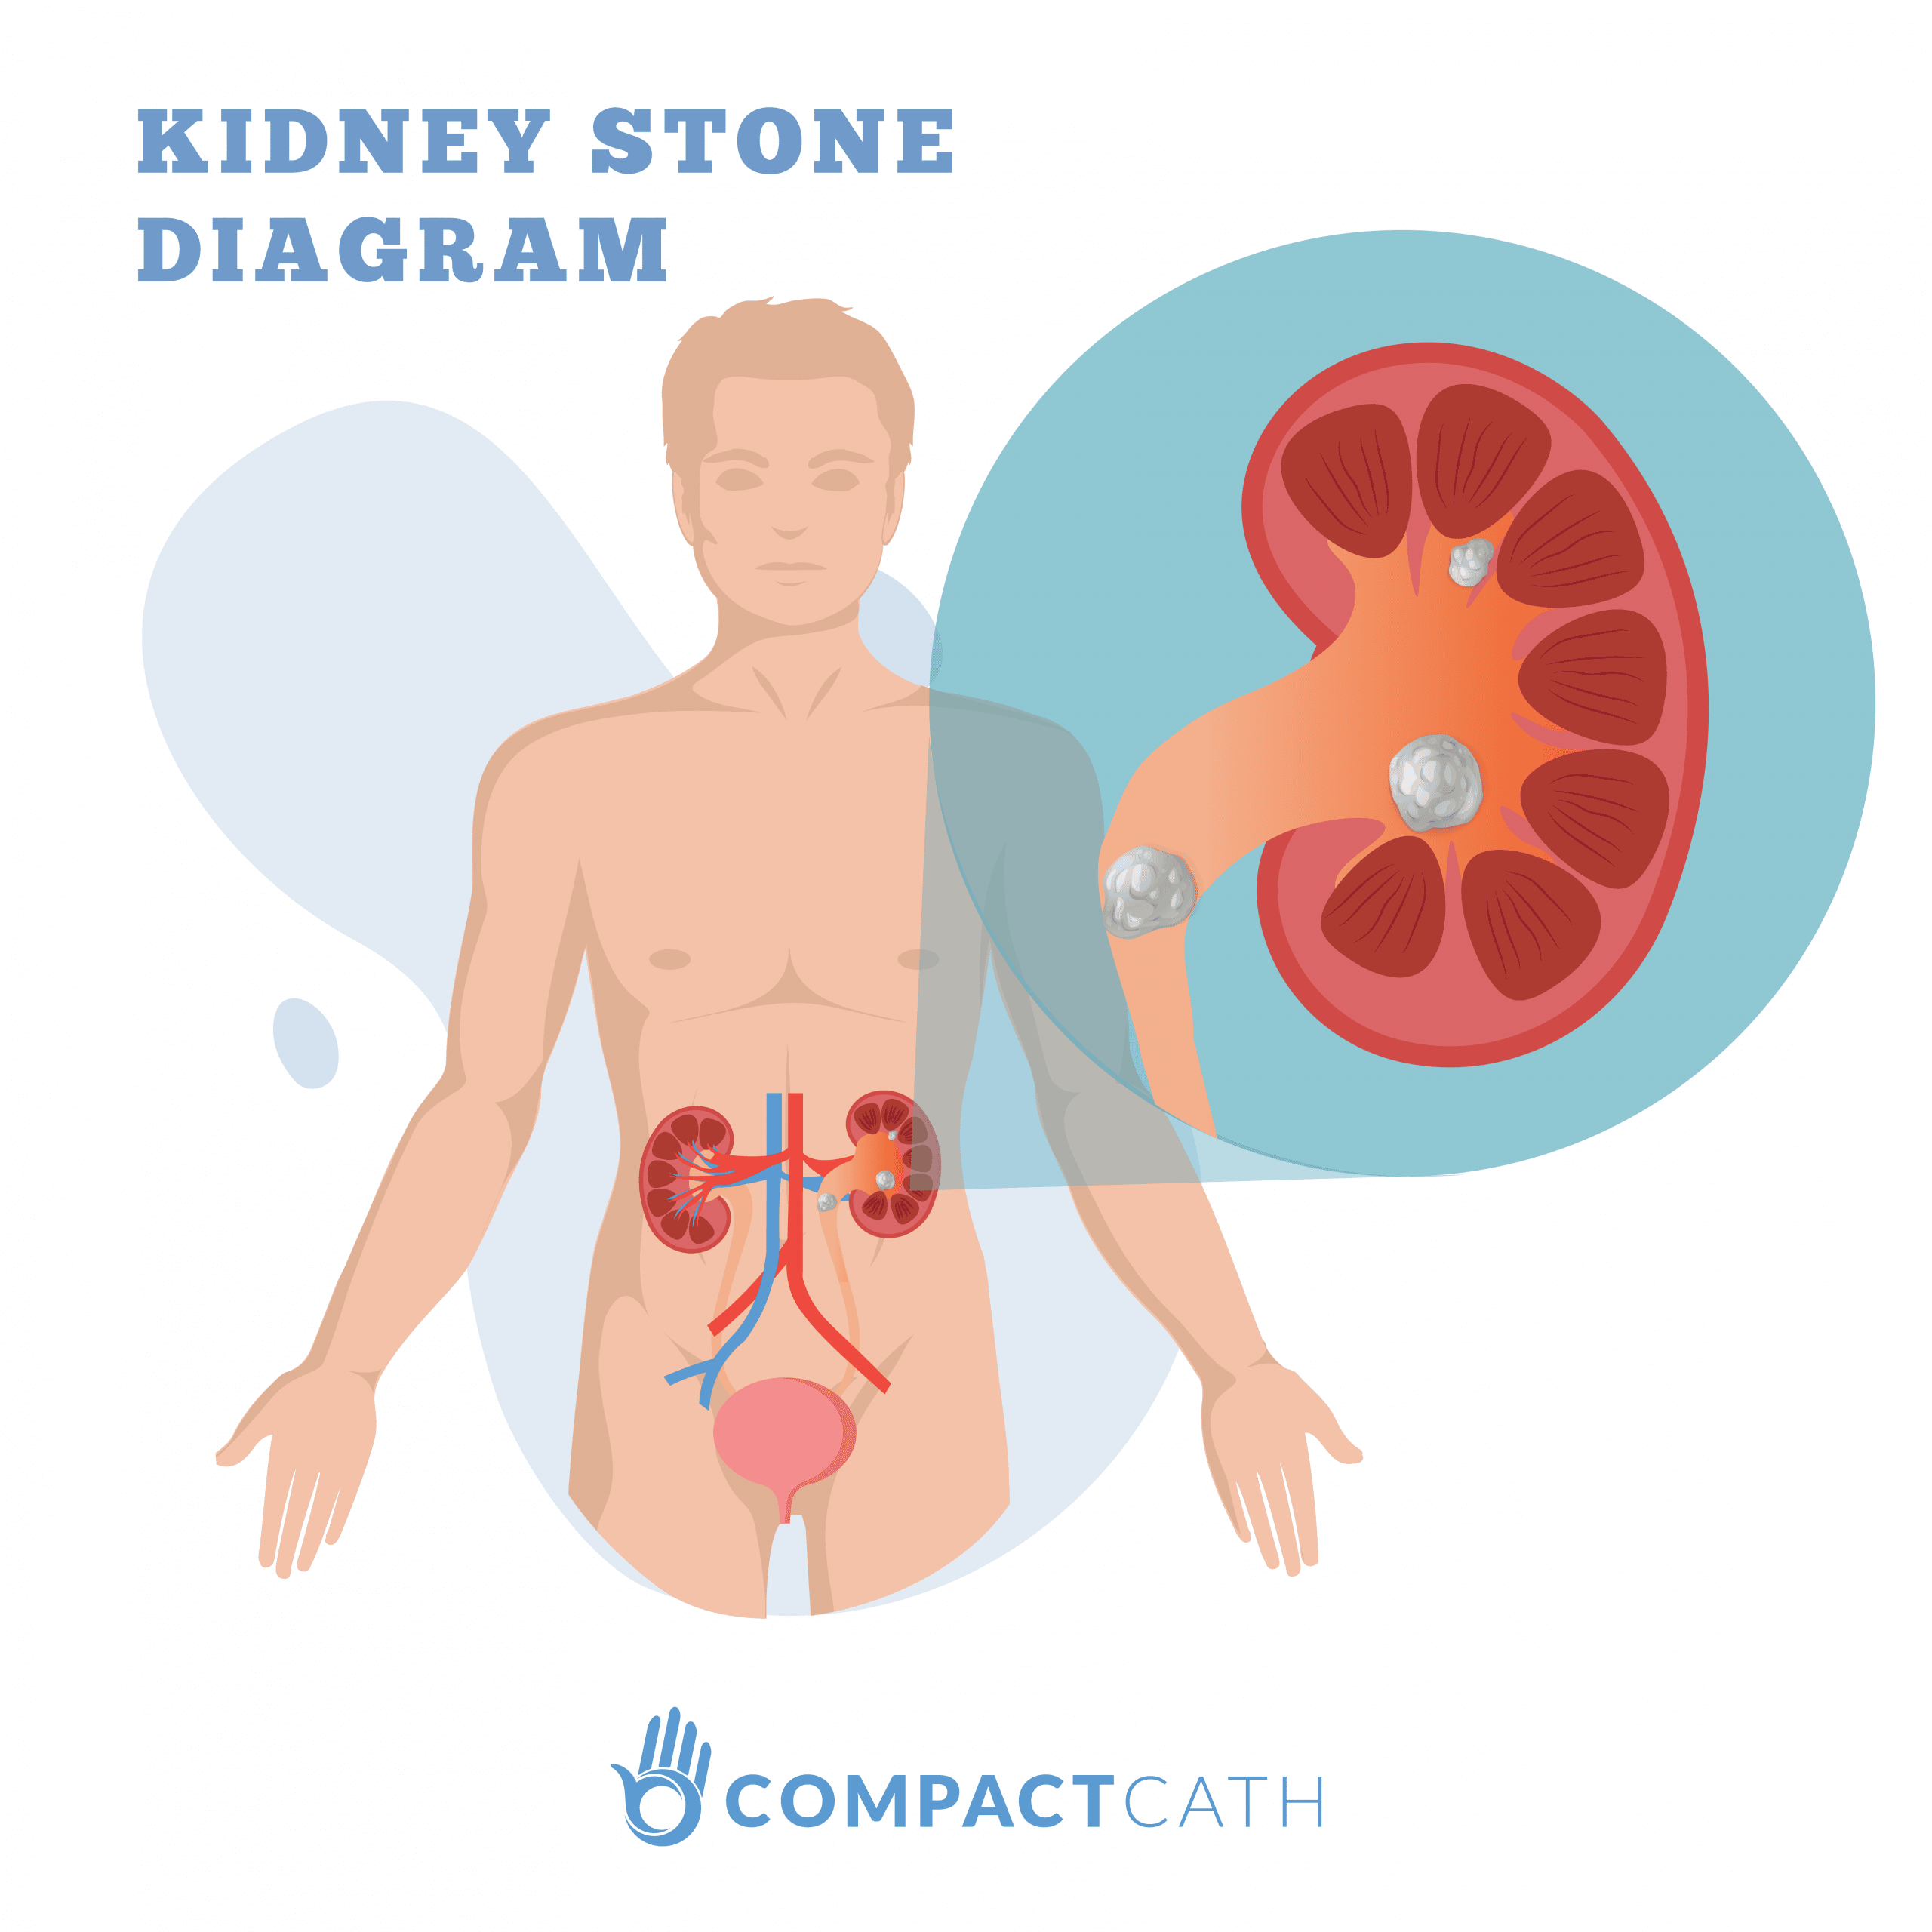 Does Kidney Stones Feel Like Cramps